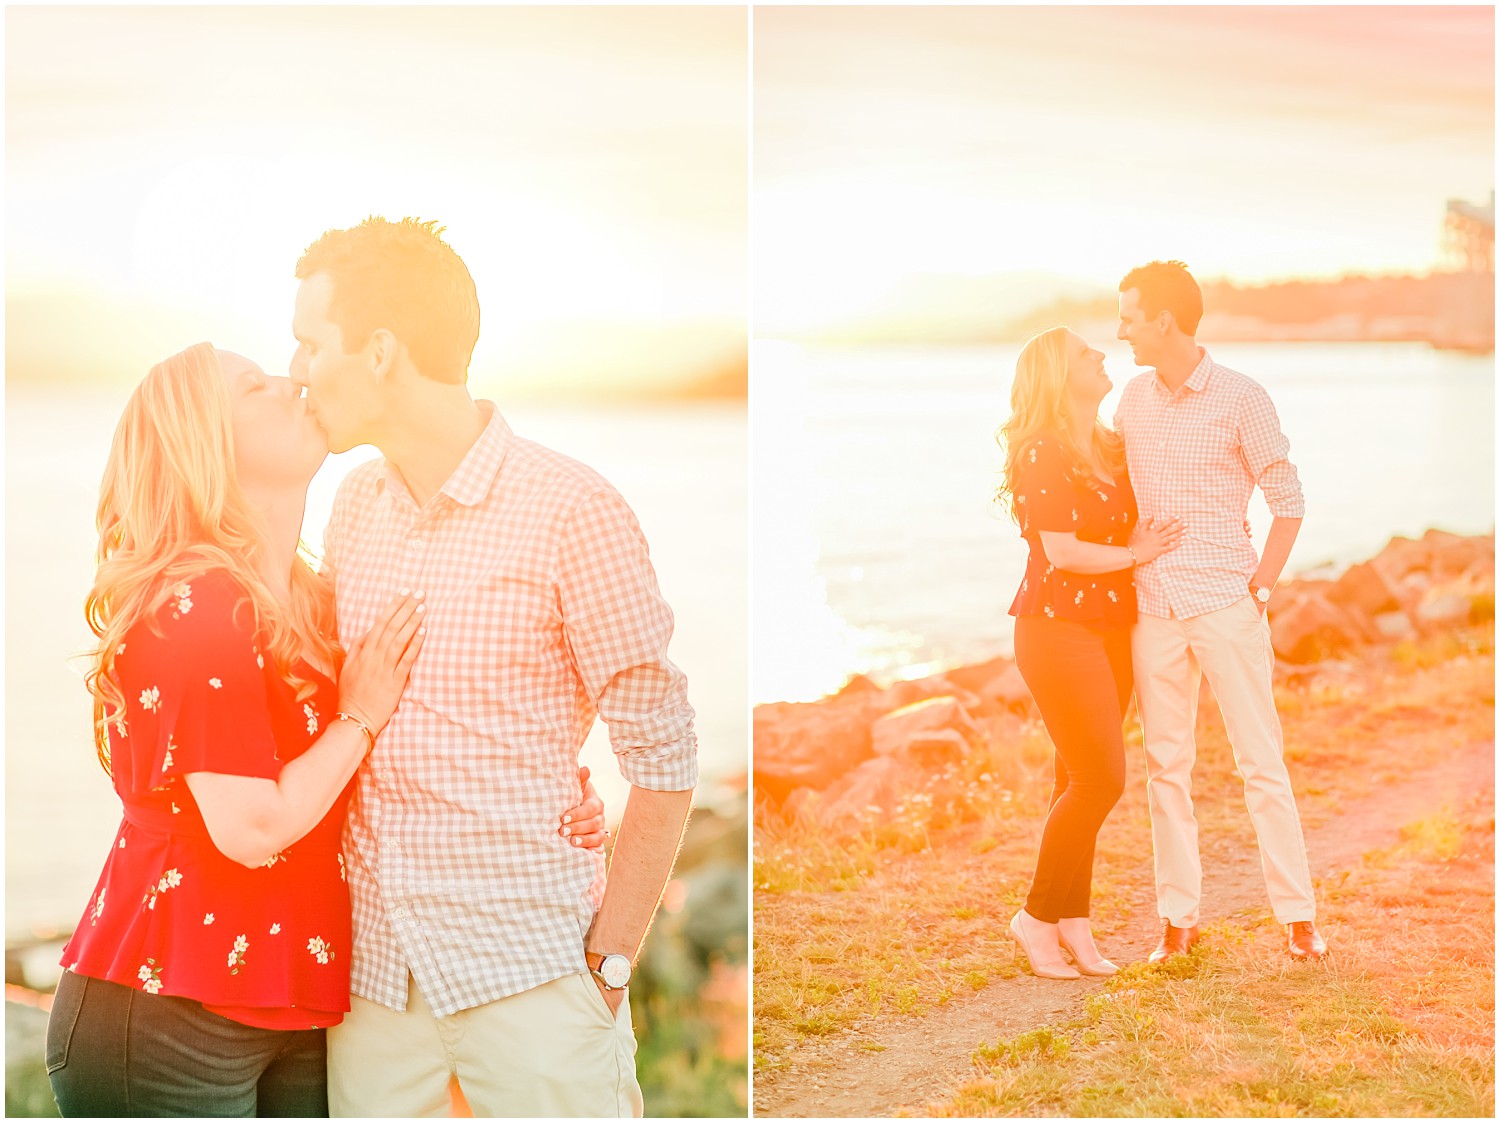 Sunset Myrtle Beach Engagement | Ryan & Sarah